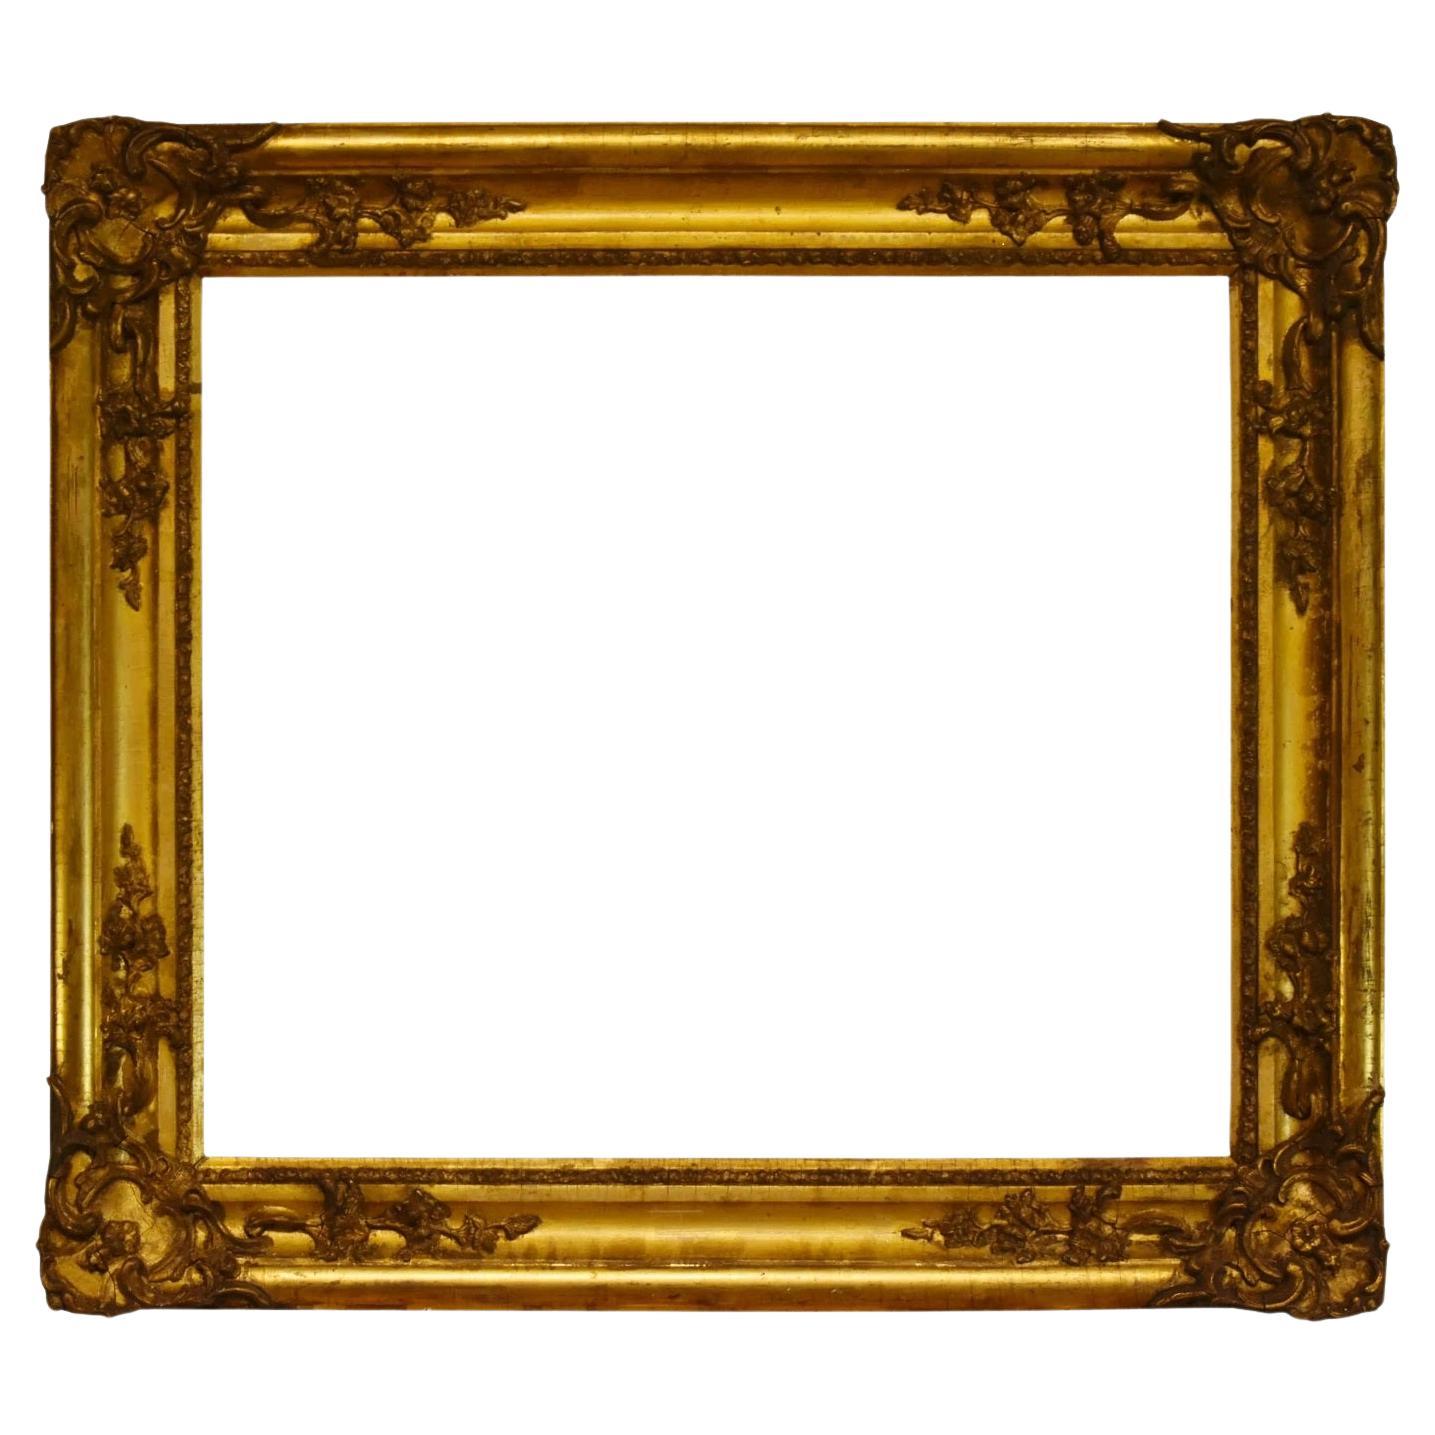 23x27 inch Victorian Gold Leaf Picture Frame circa 1840